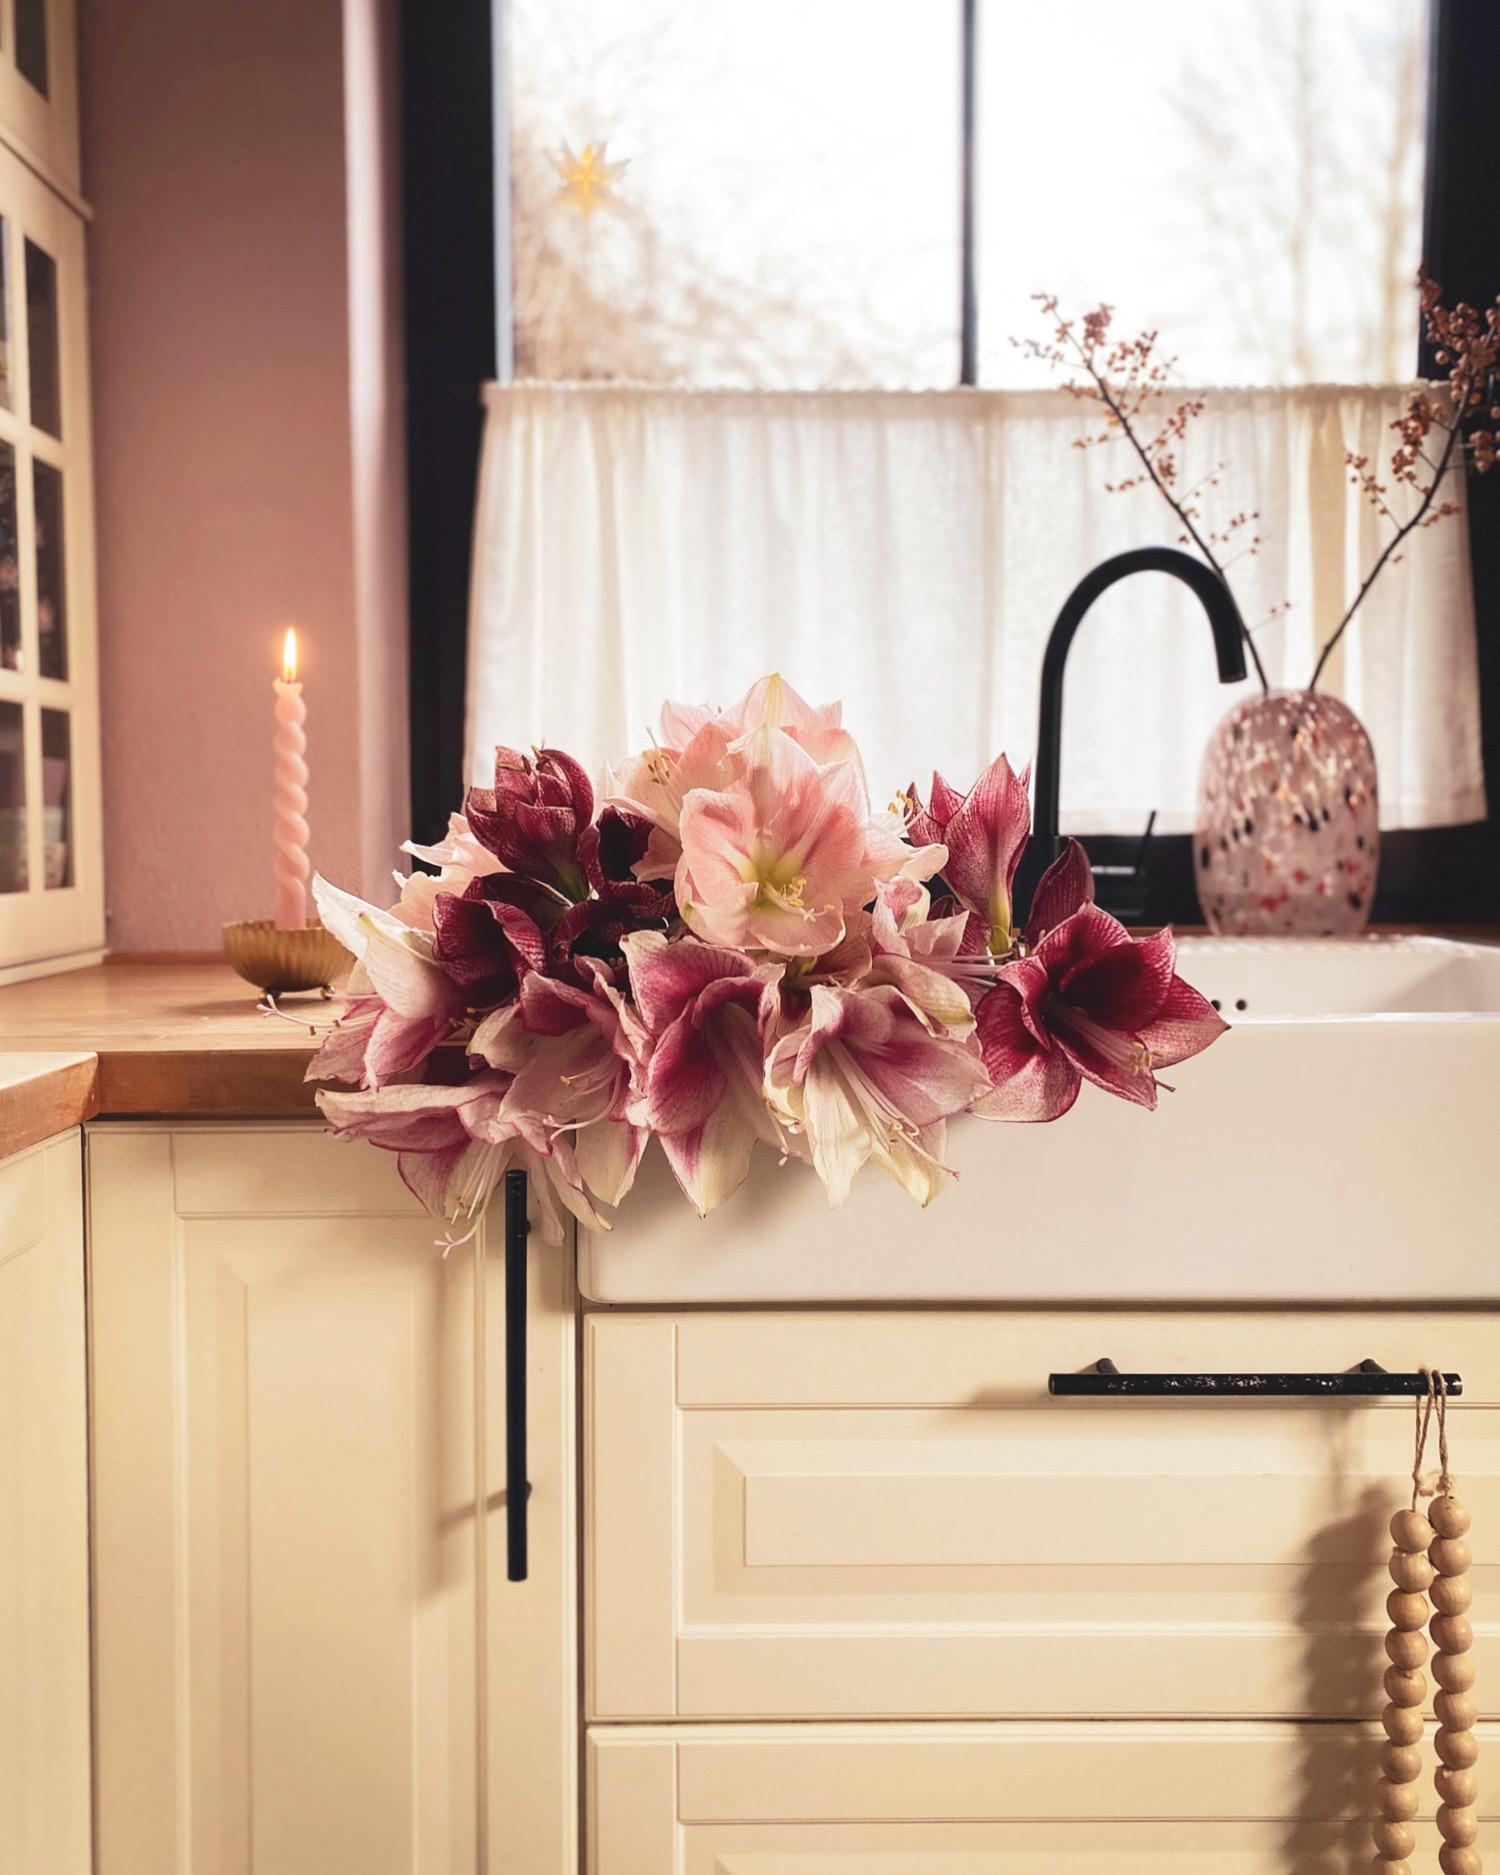 Amaryllis
#kitchen#christmasflowers#amaryllis#hygge#homestyle#interiorlover#landhausküche